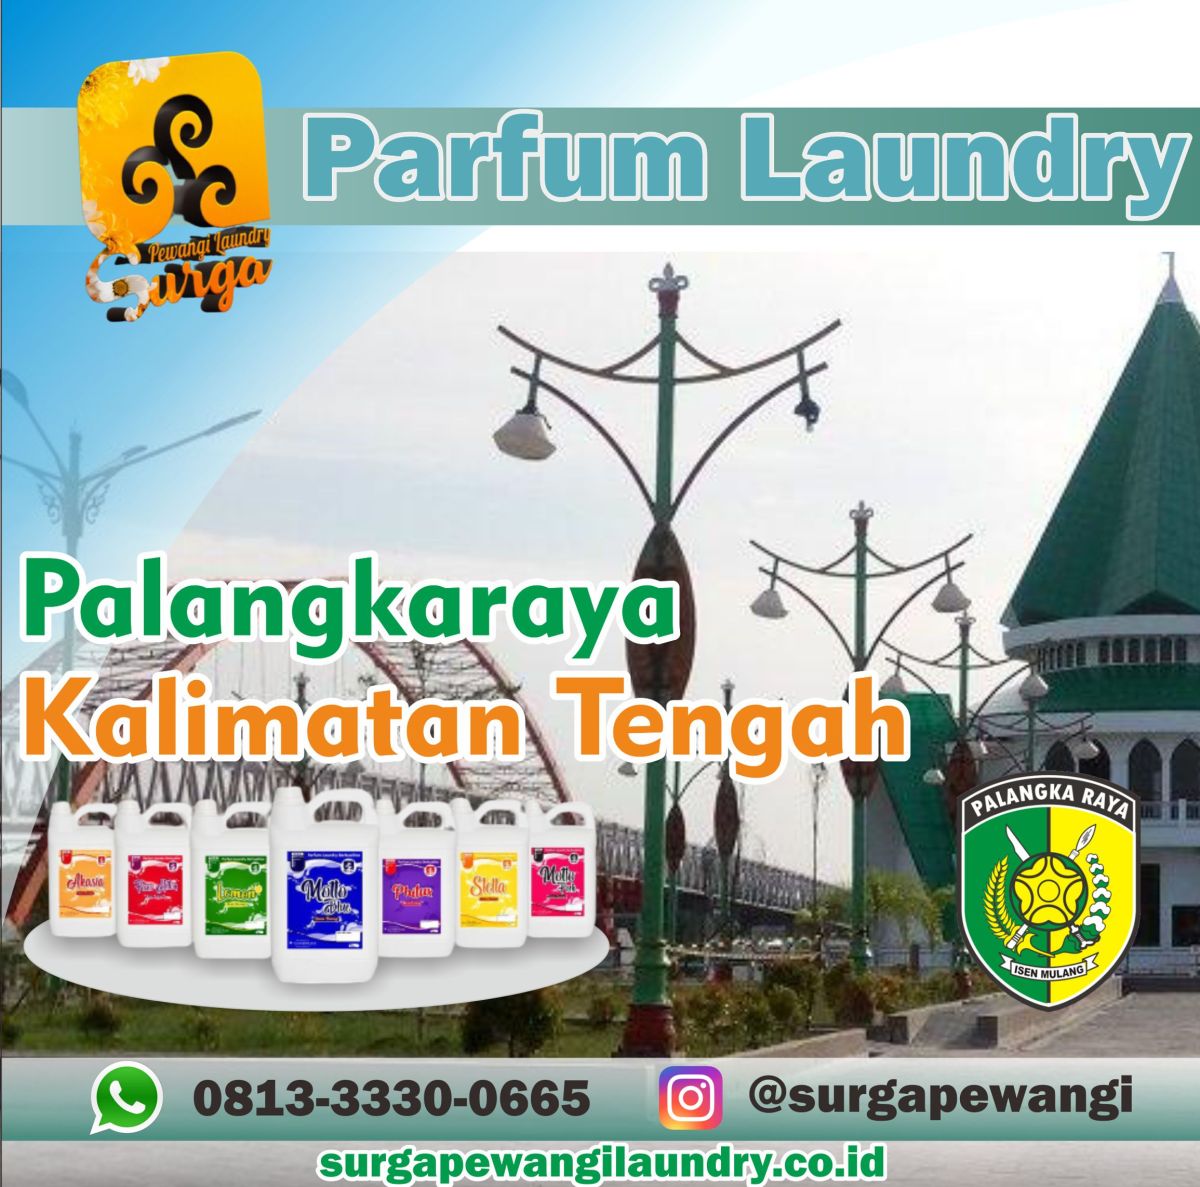 Parfum Laundry Kota Palangkaraya, Kalimantan Tengah